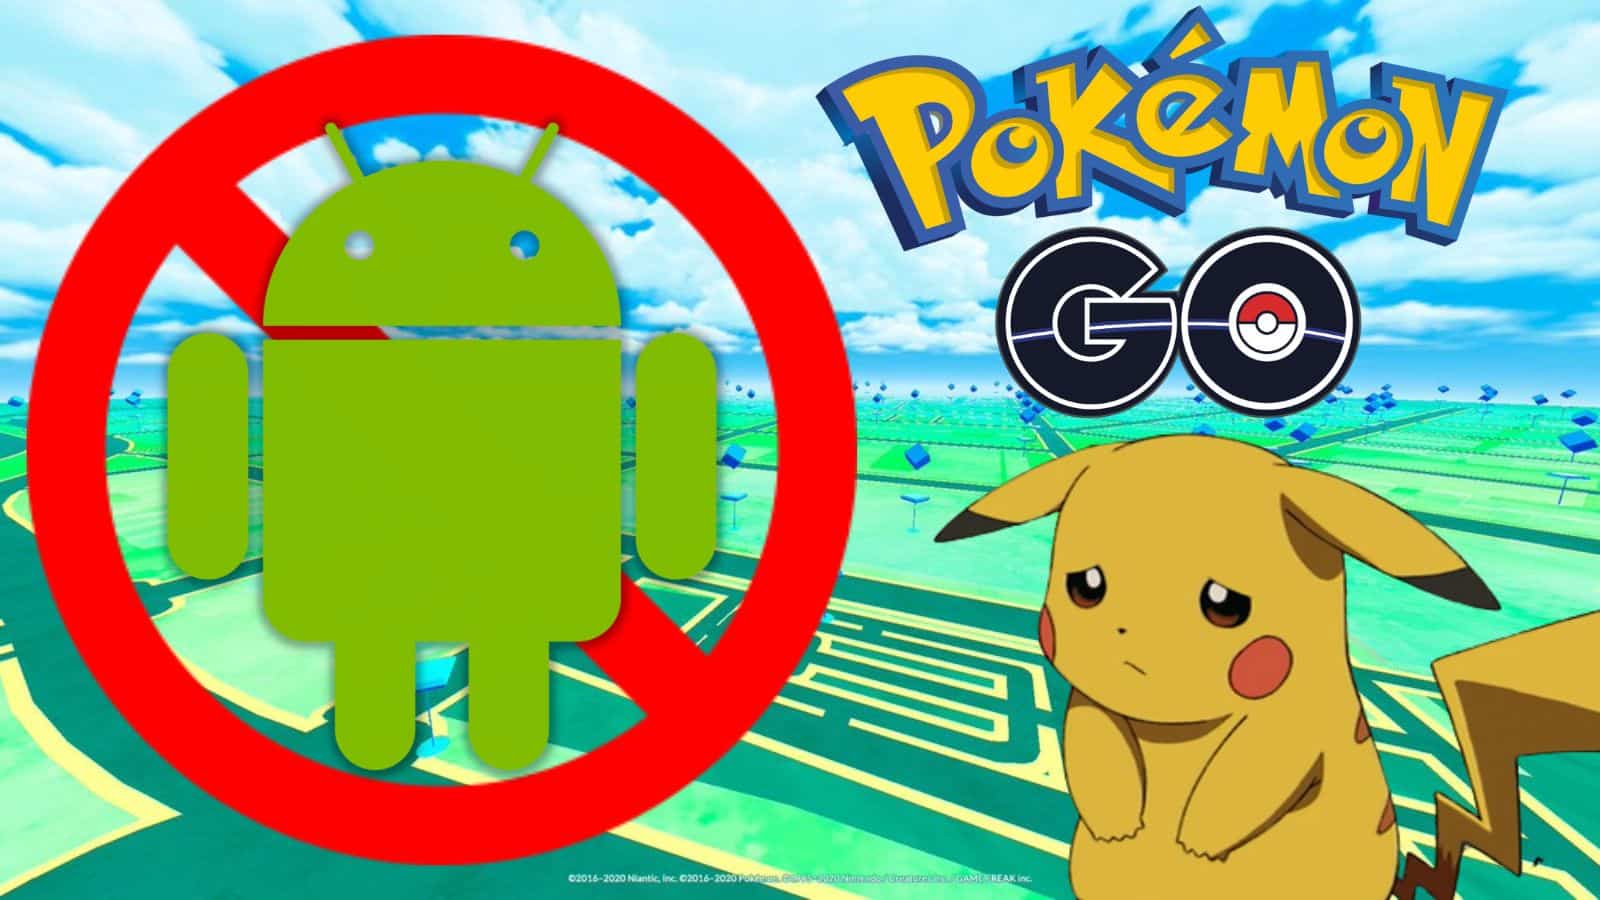 pokemon go android logo with sad pikachu